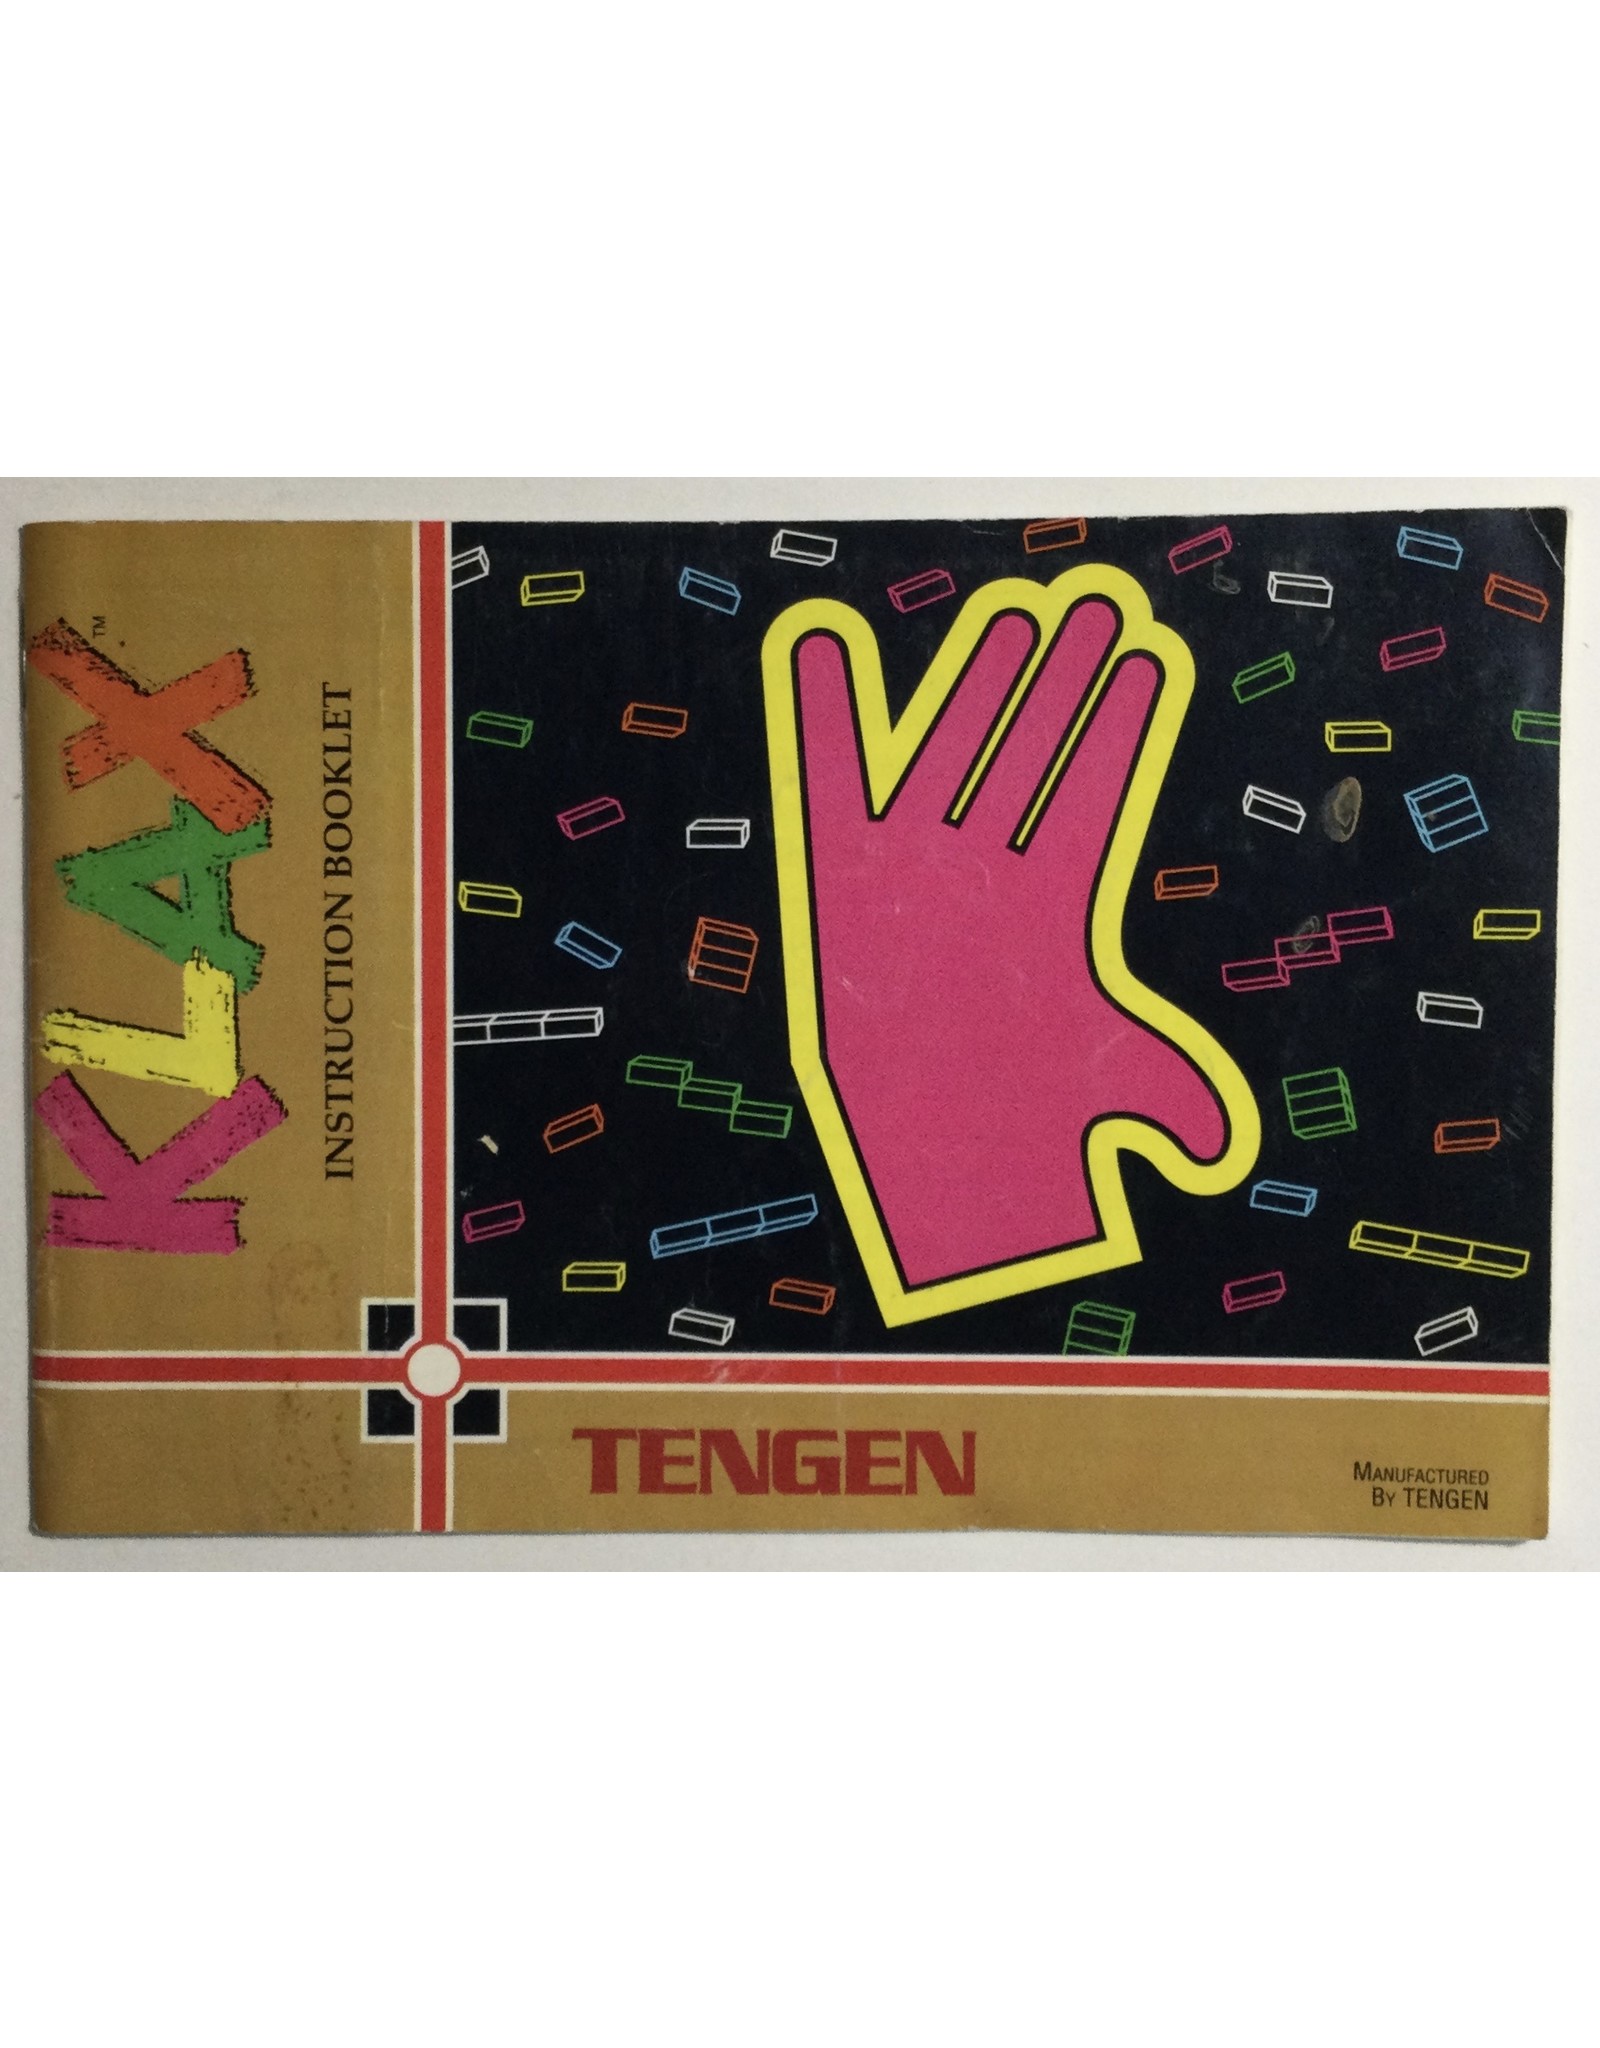 TENGEN KLAX for Nintendo Entertainment system (NES)